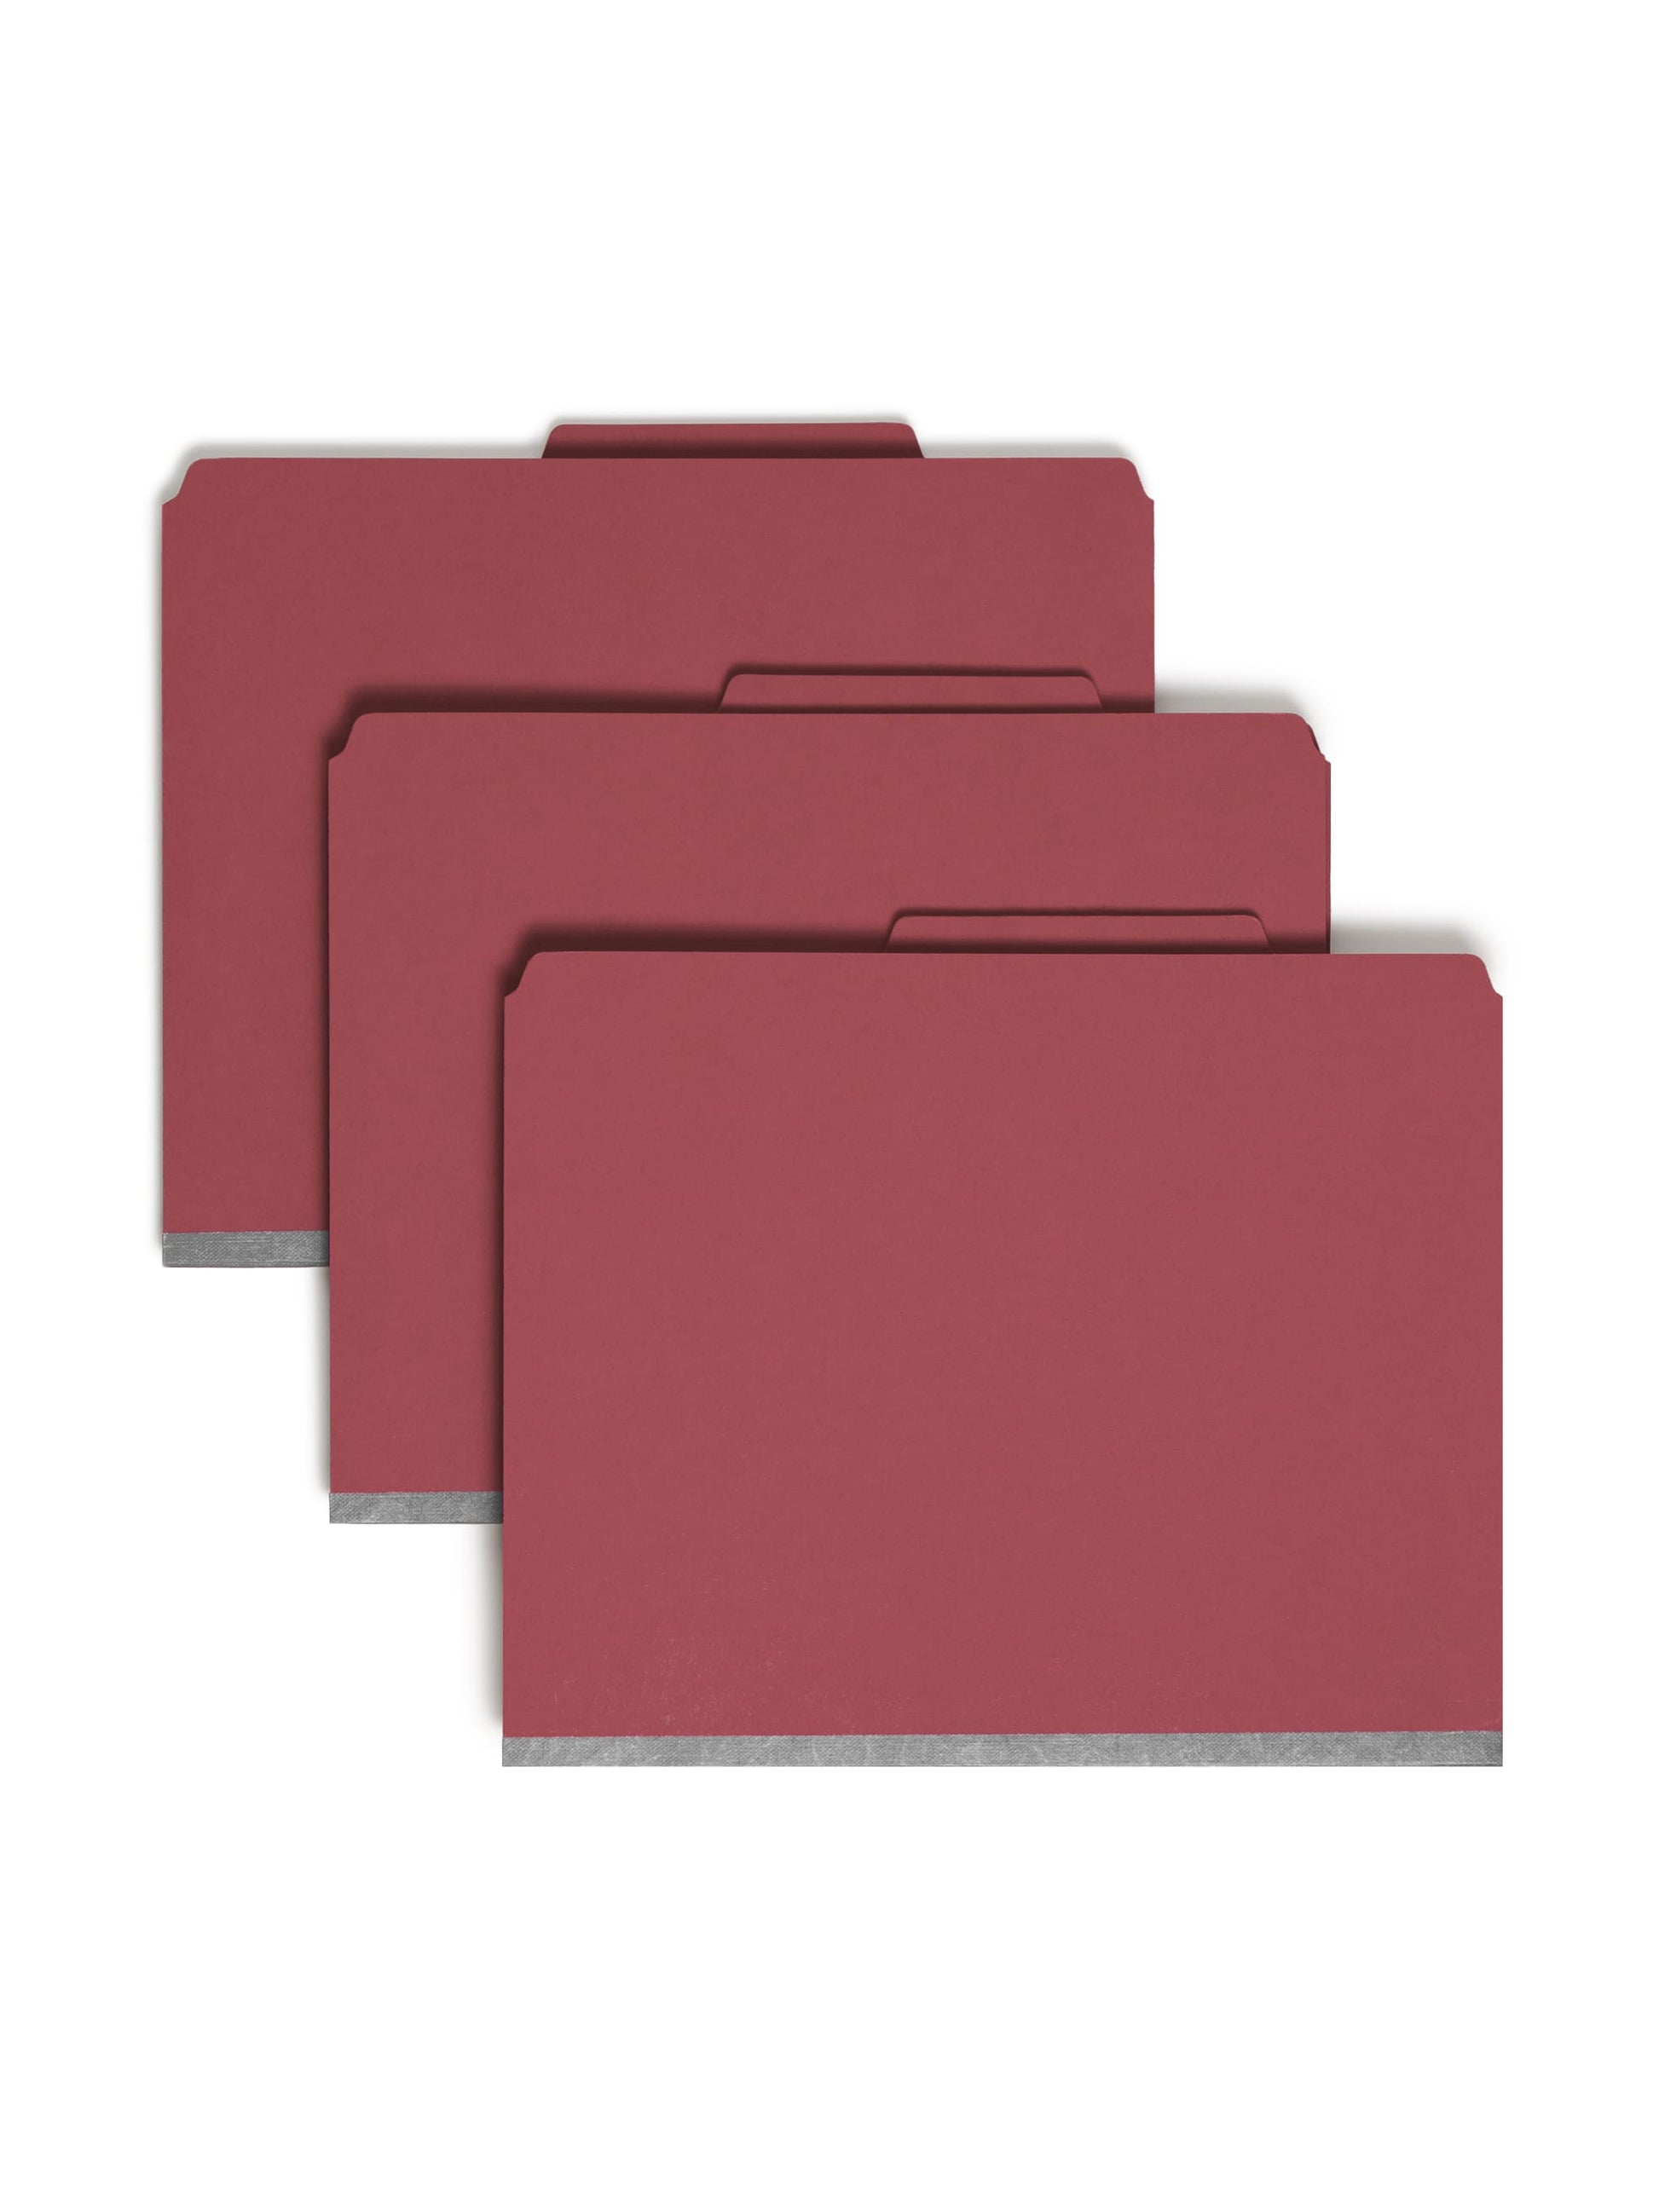 SafeSHIELD® Pressboard Classification File Folders, 1 Divider, 2 inch Expansion, Bright Red Color, Letter Size, Set of 0, 30086486137318